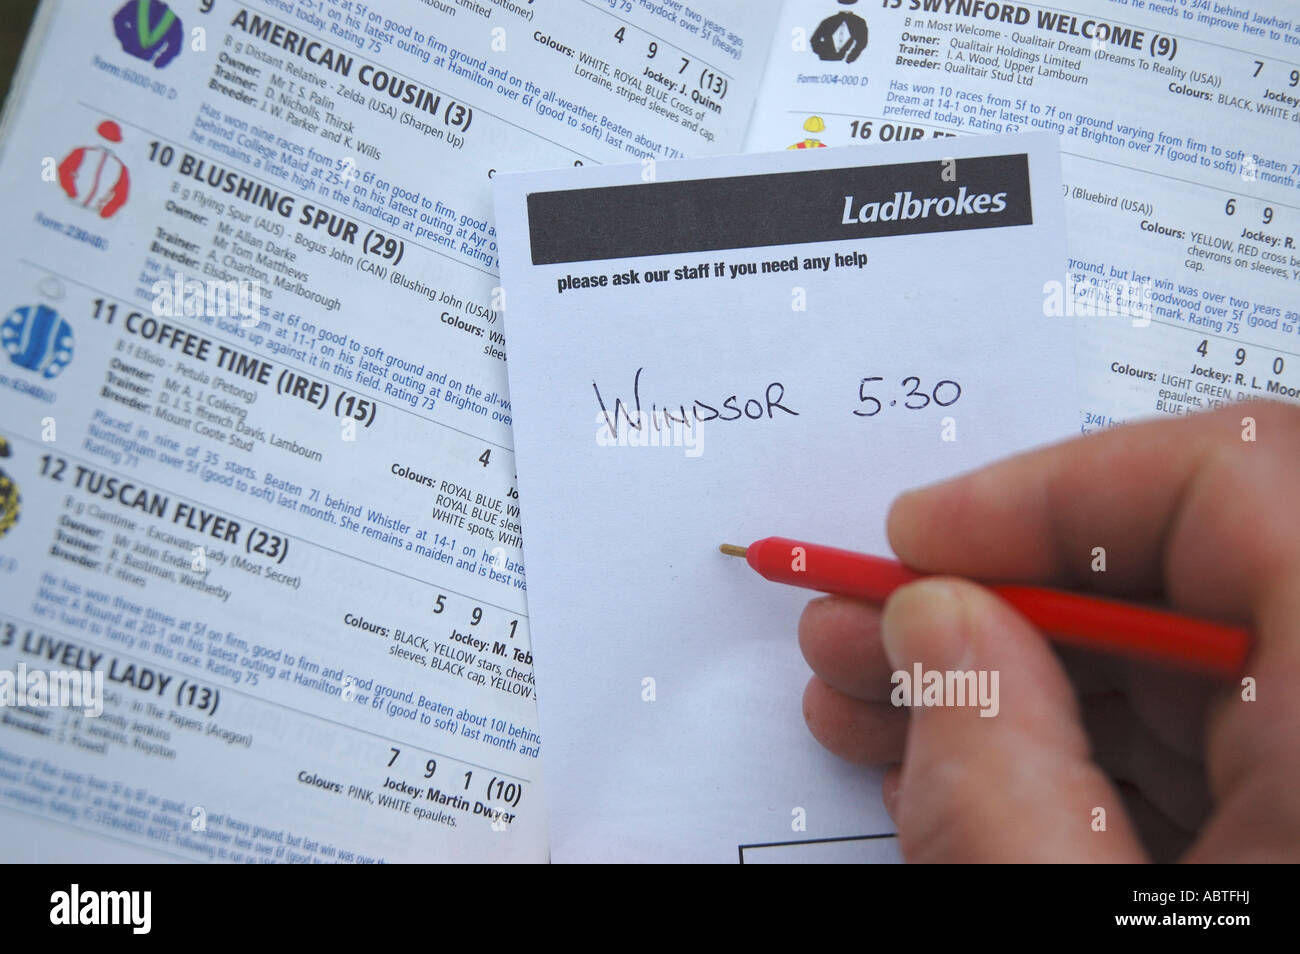 Ladbrokes betting slip and racecard Stock Photo